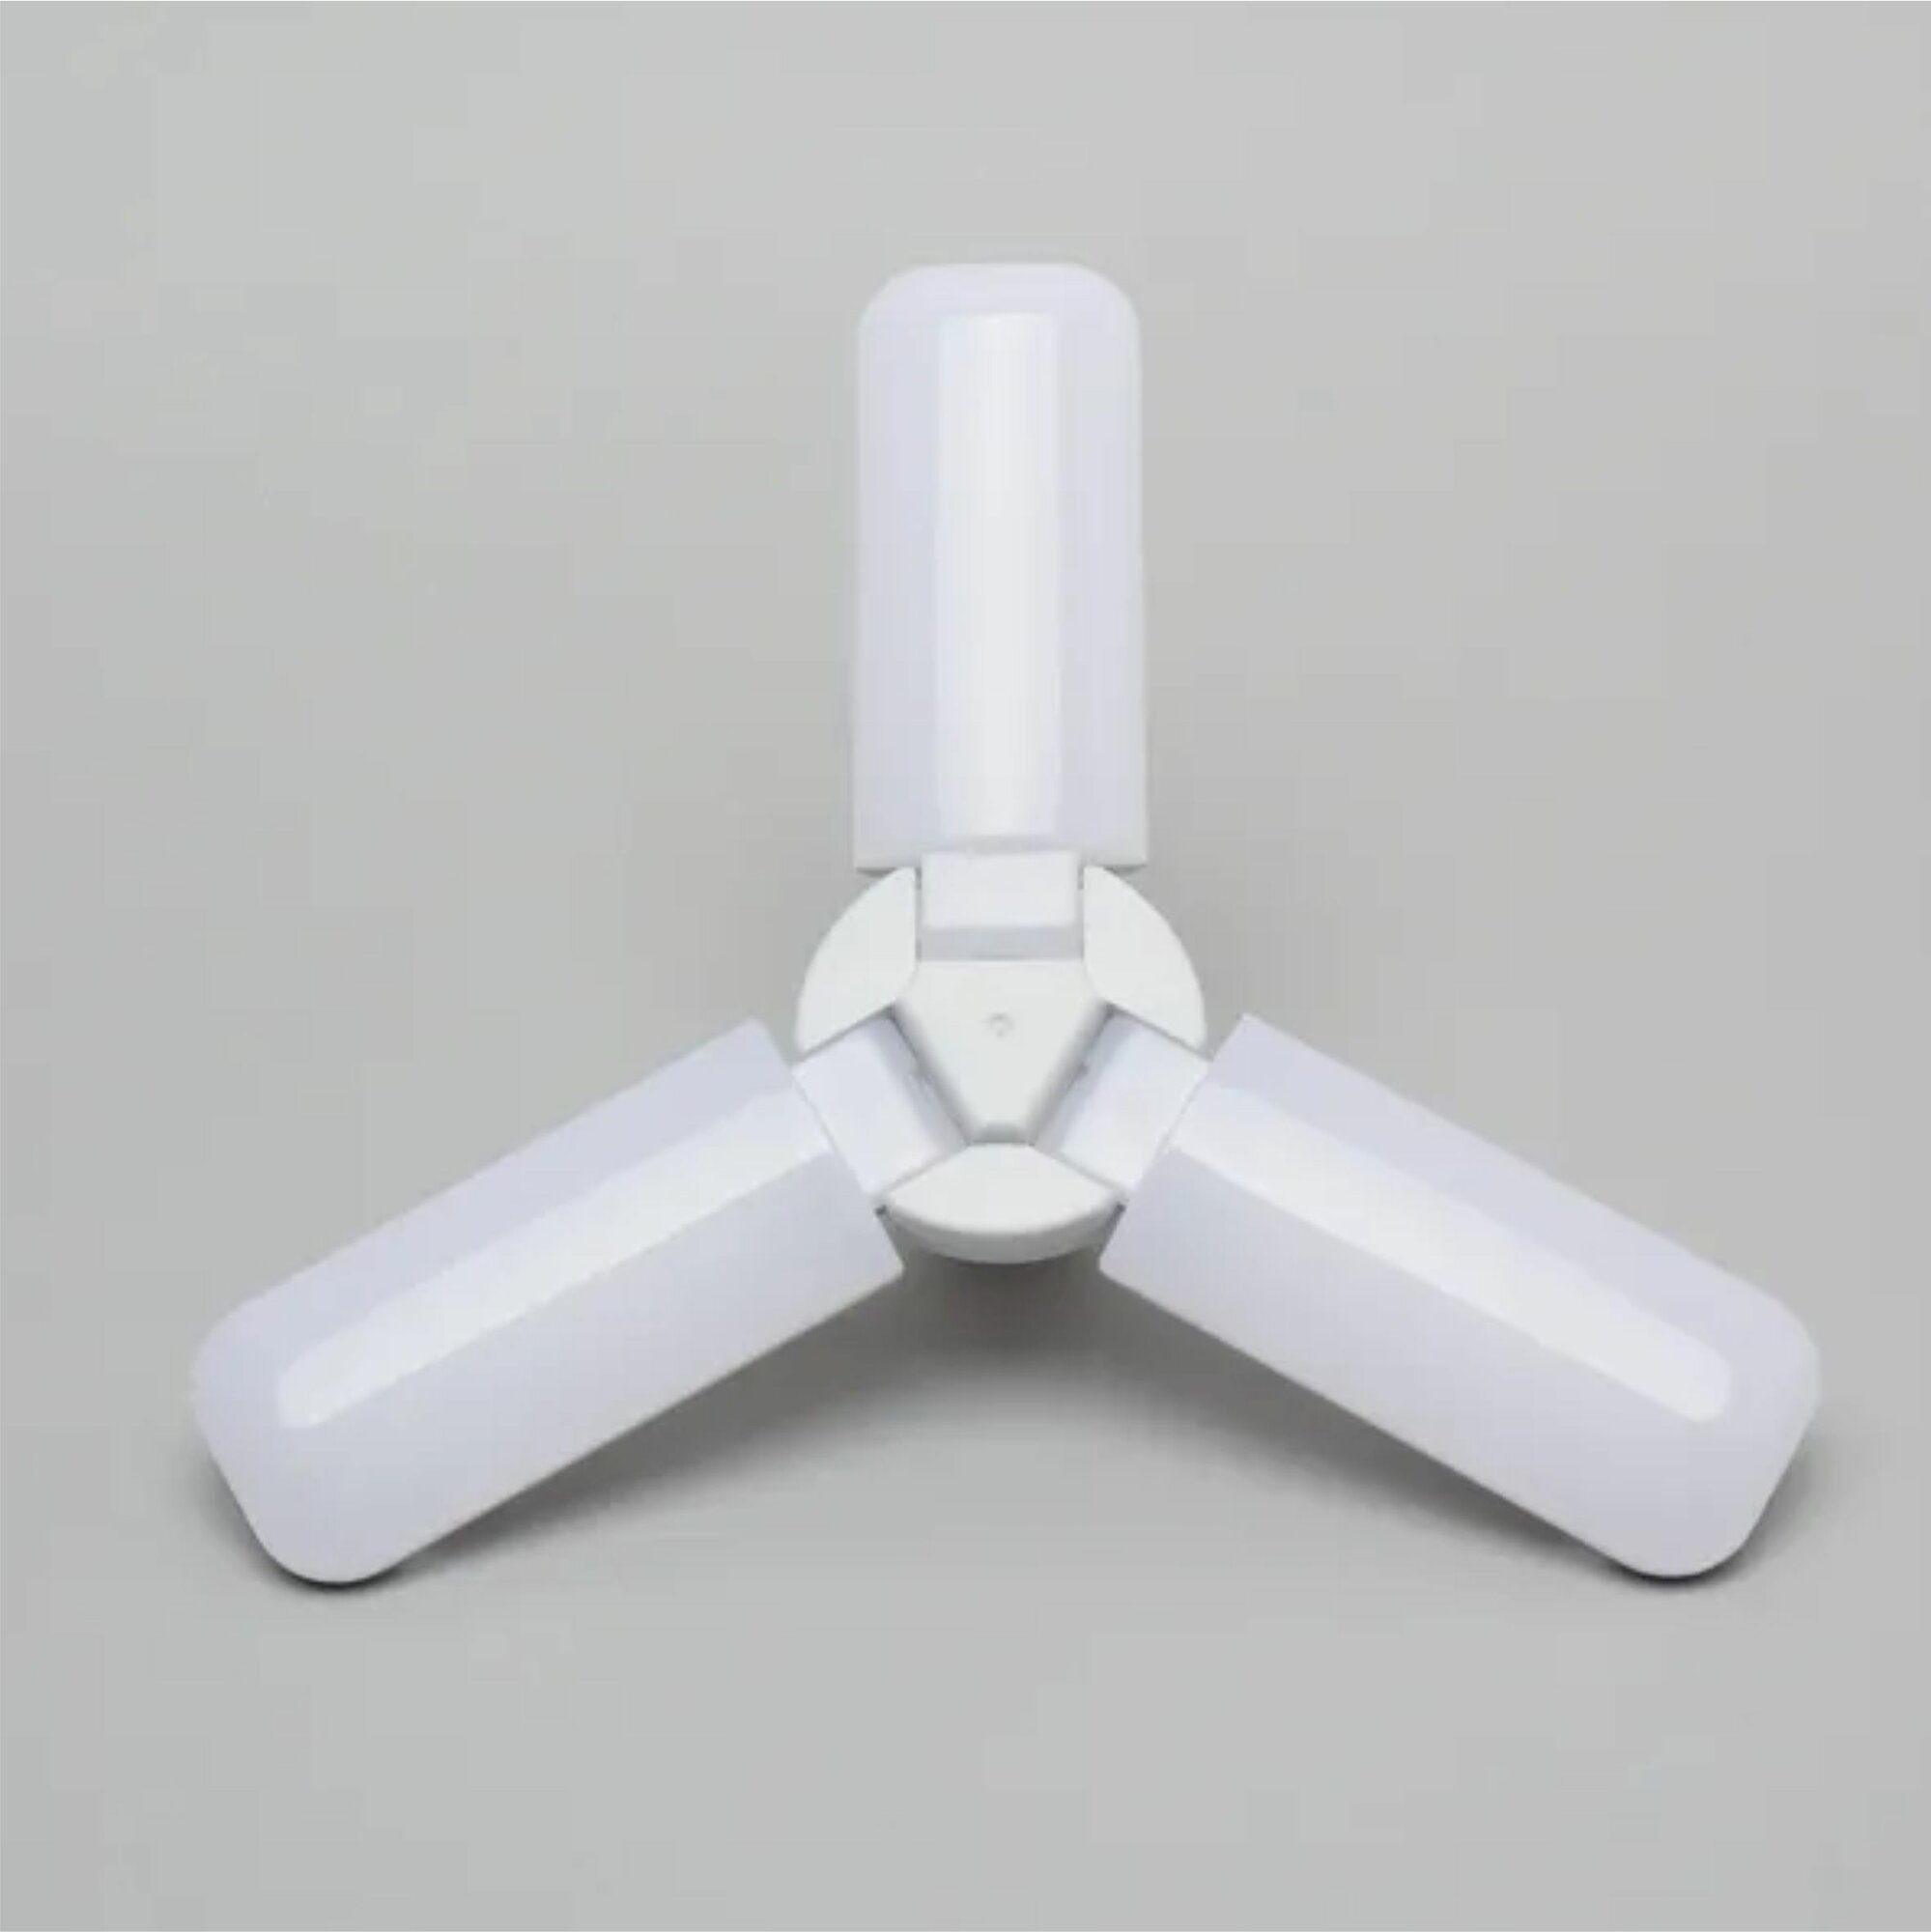 Лампа светодиодная Mini Fan Blade 3 лепестка/ складная интерьерная лампа вентилятор